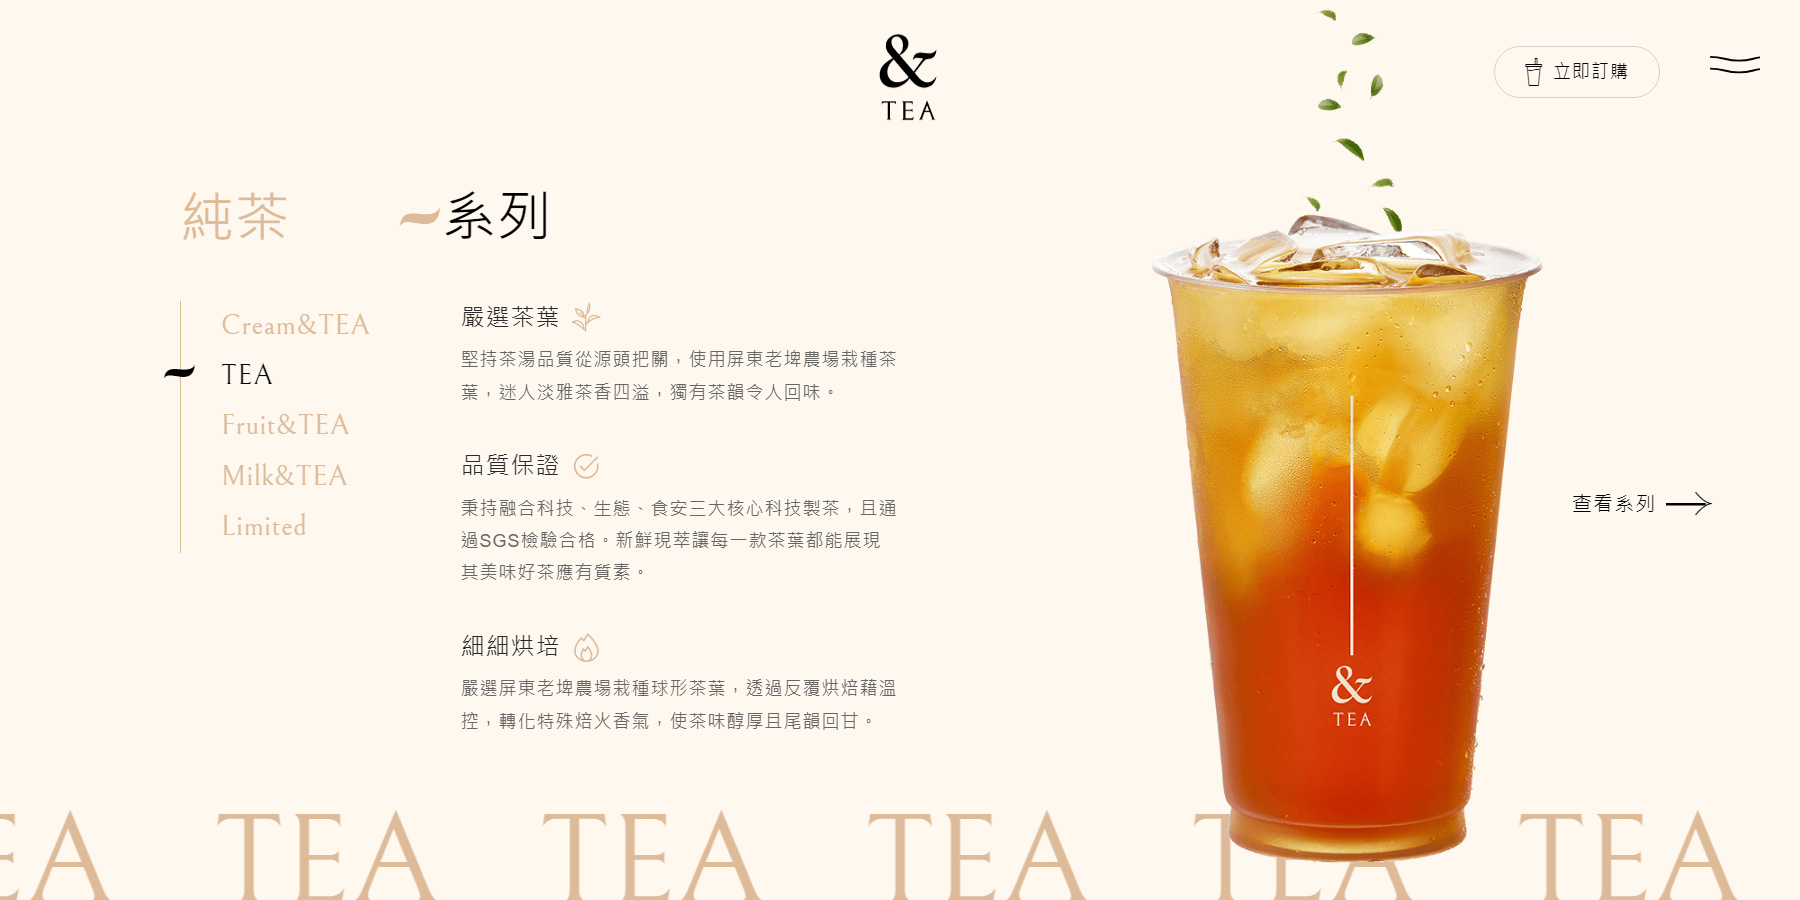 &Tea - Website of the Day